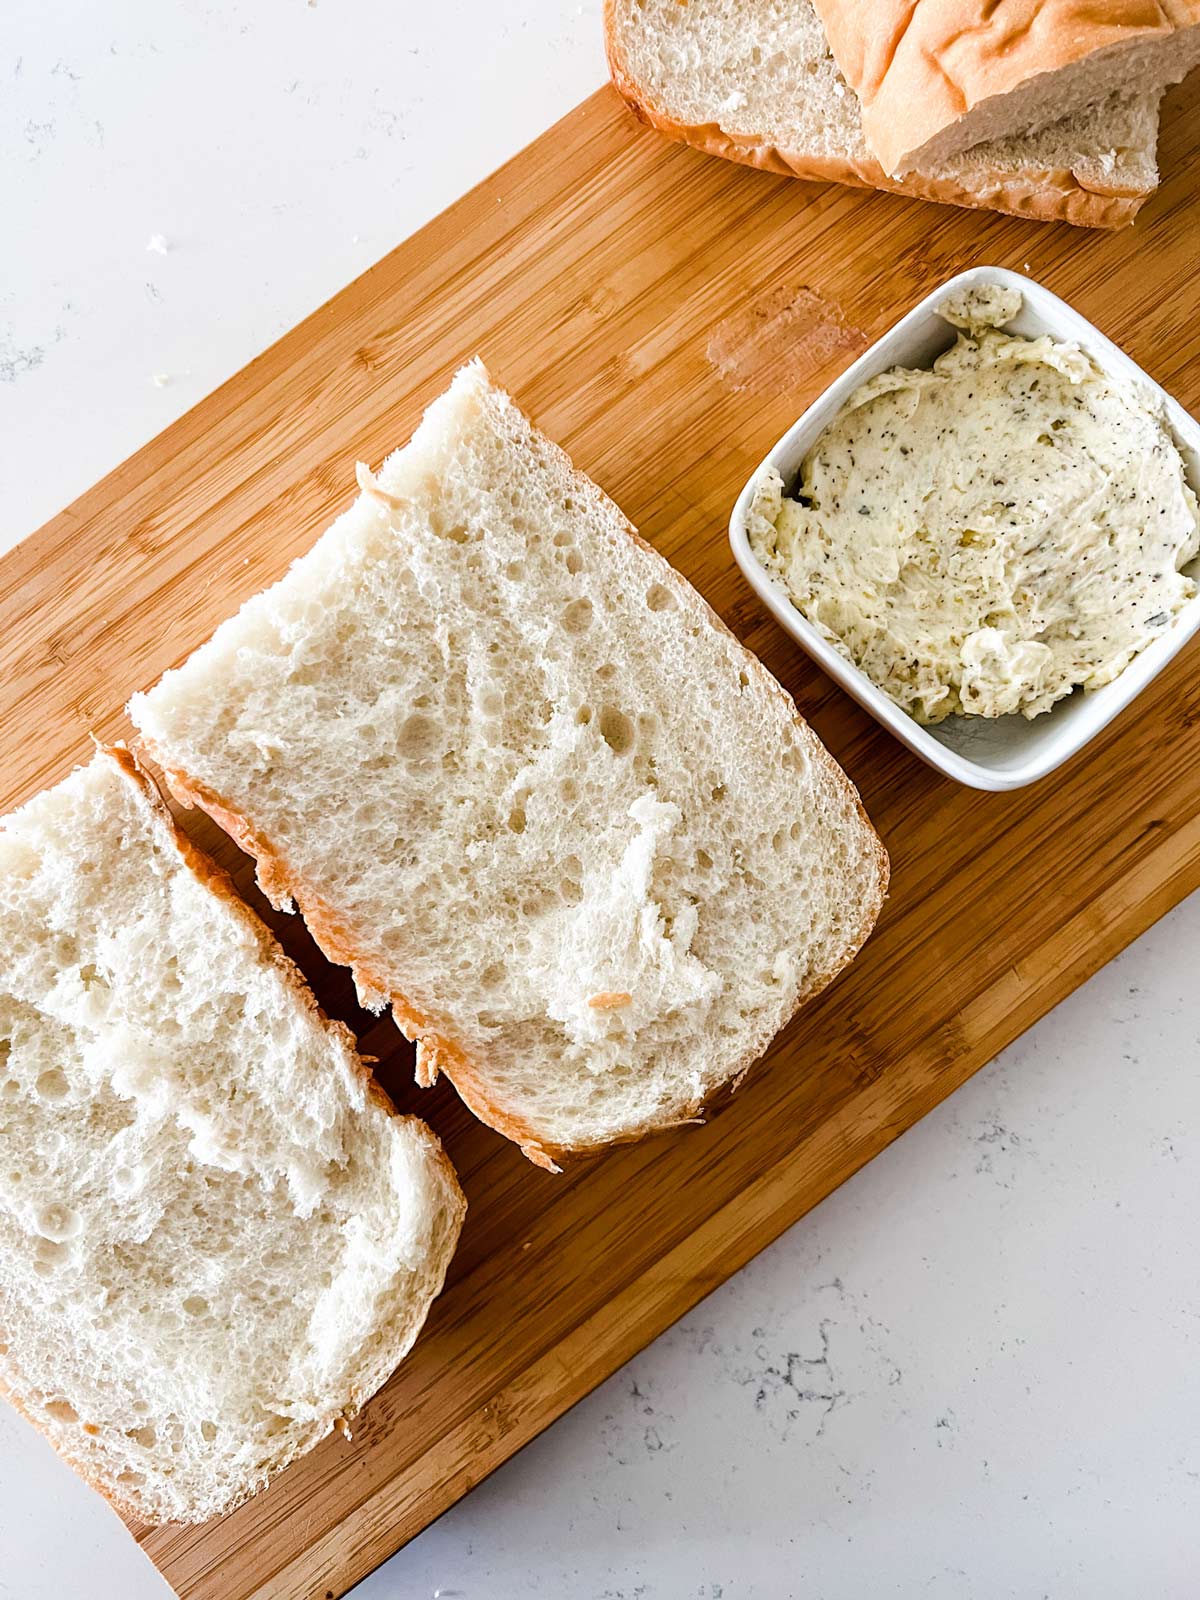 Garlic butter sitting next to sliced Italian bread on a cutting board.